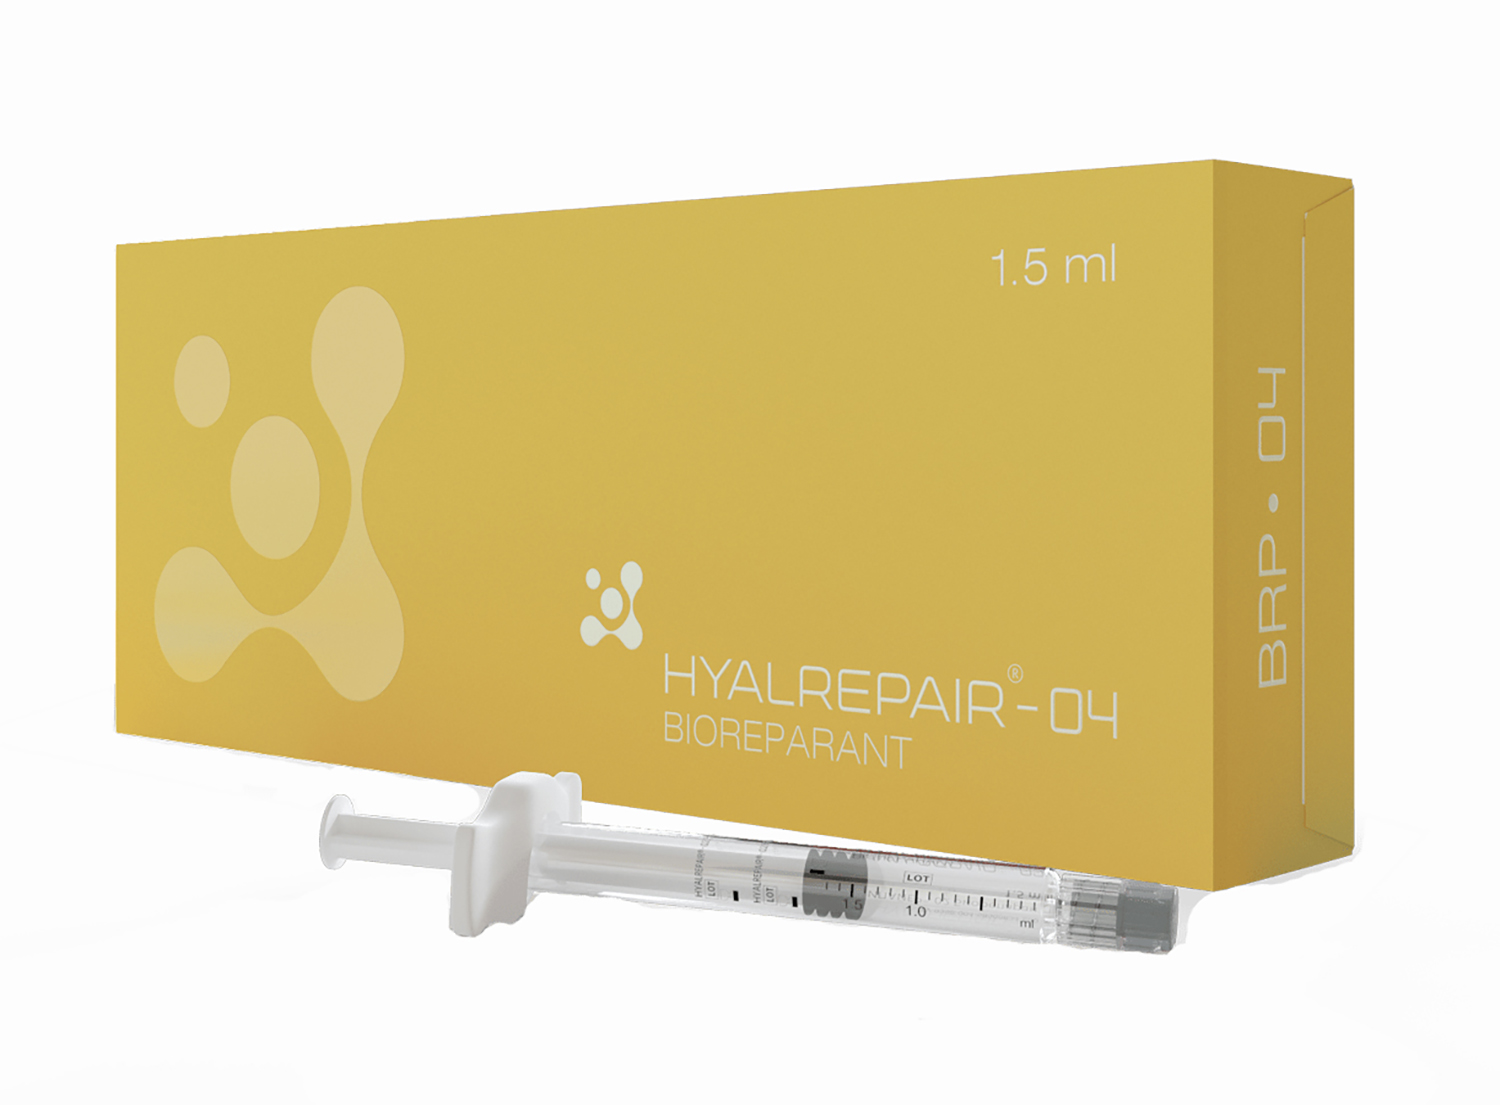 Hyalrepair-04 Bioreparant